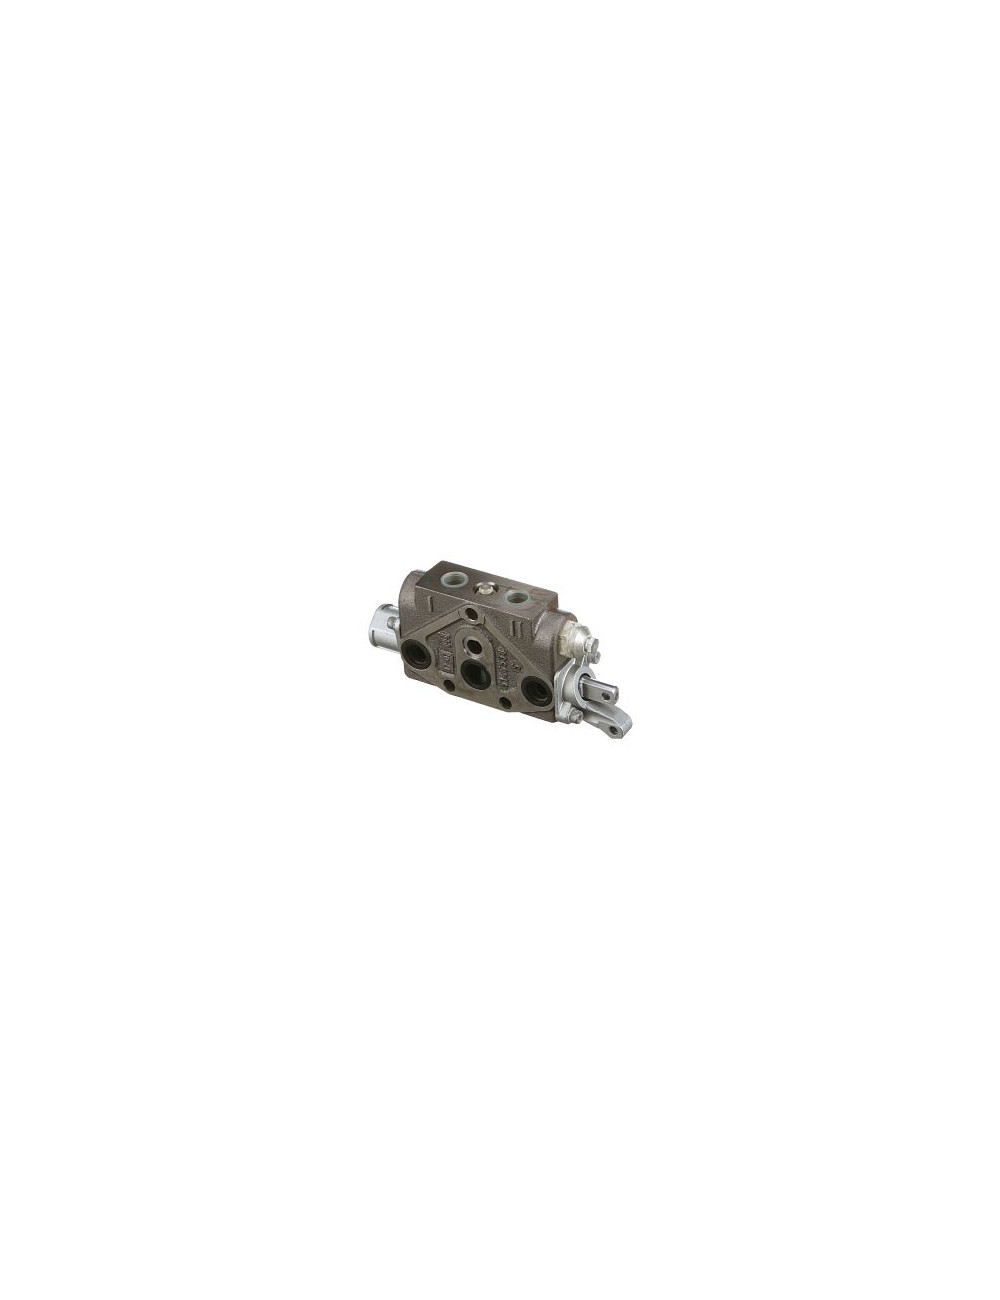 Distributore idraulico New Holland - cod 87609761